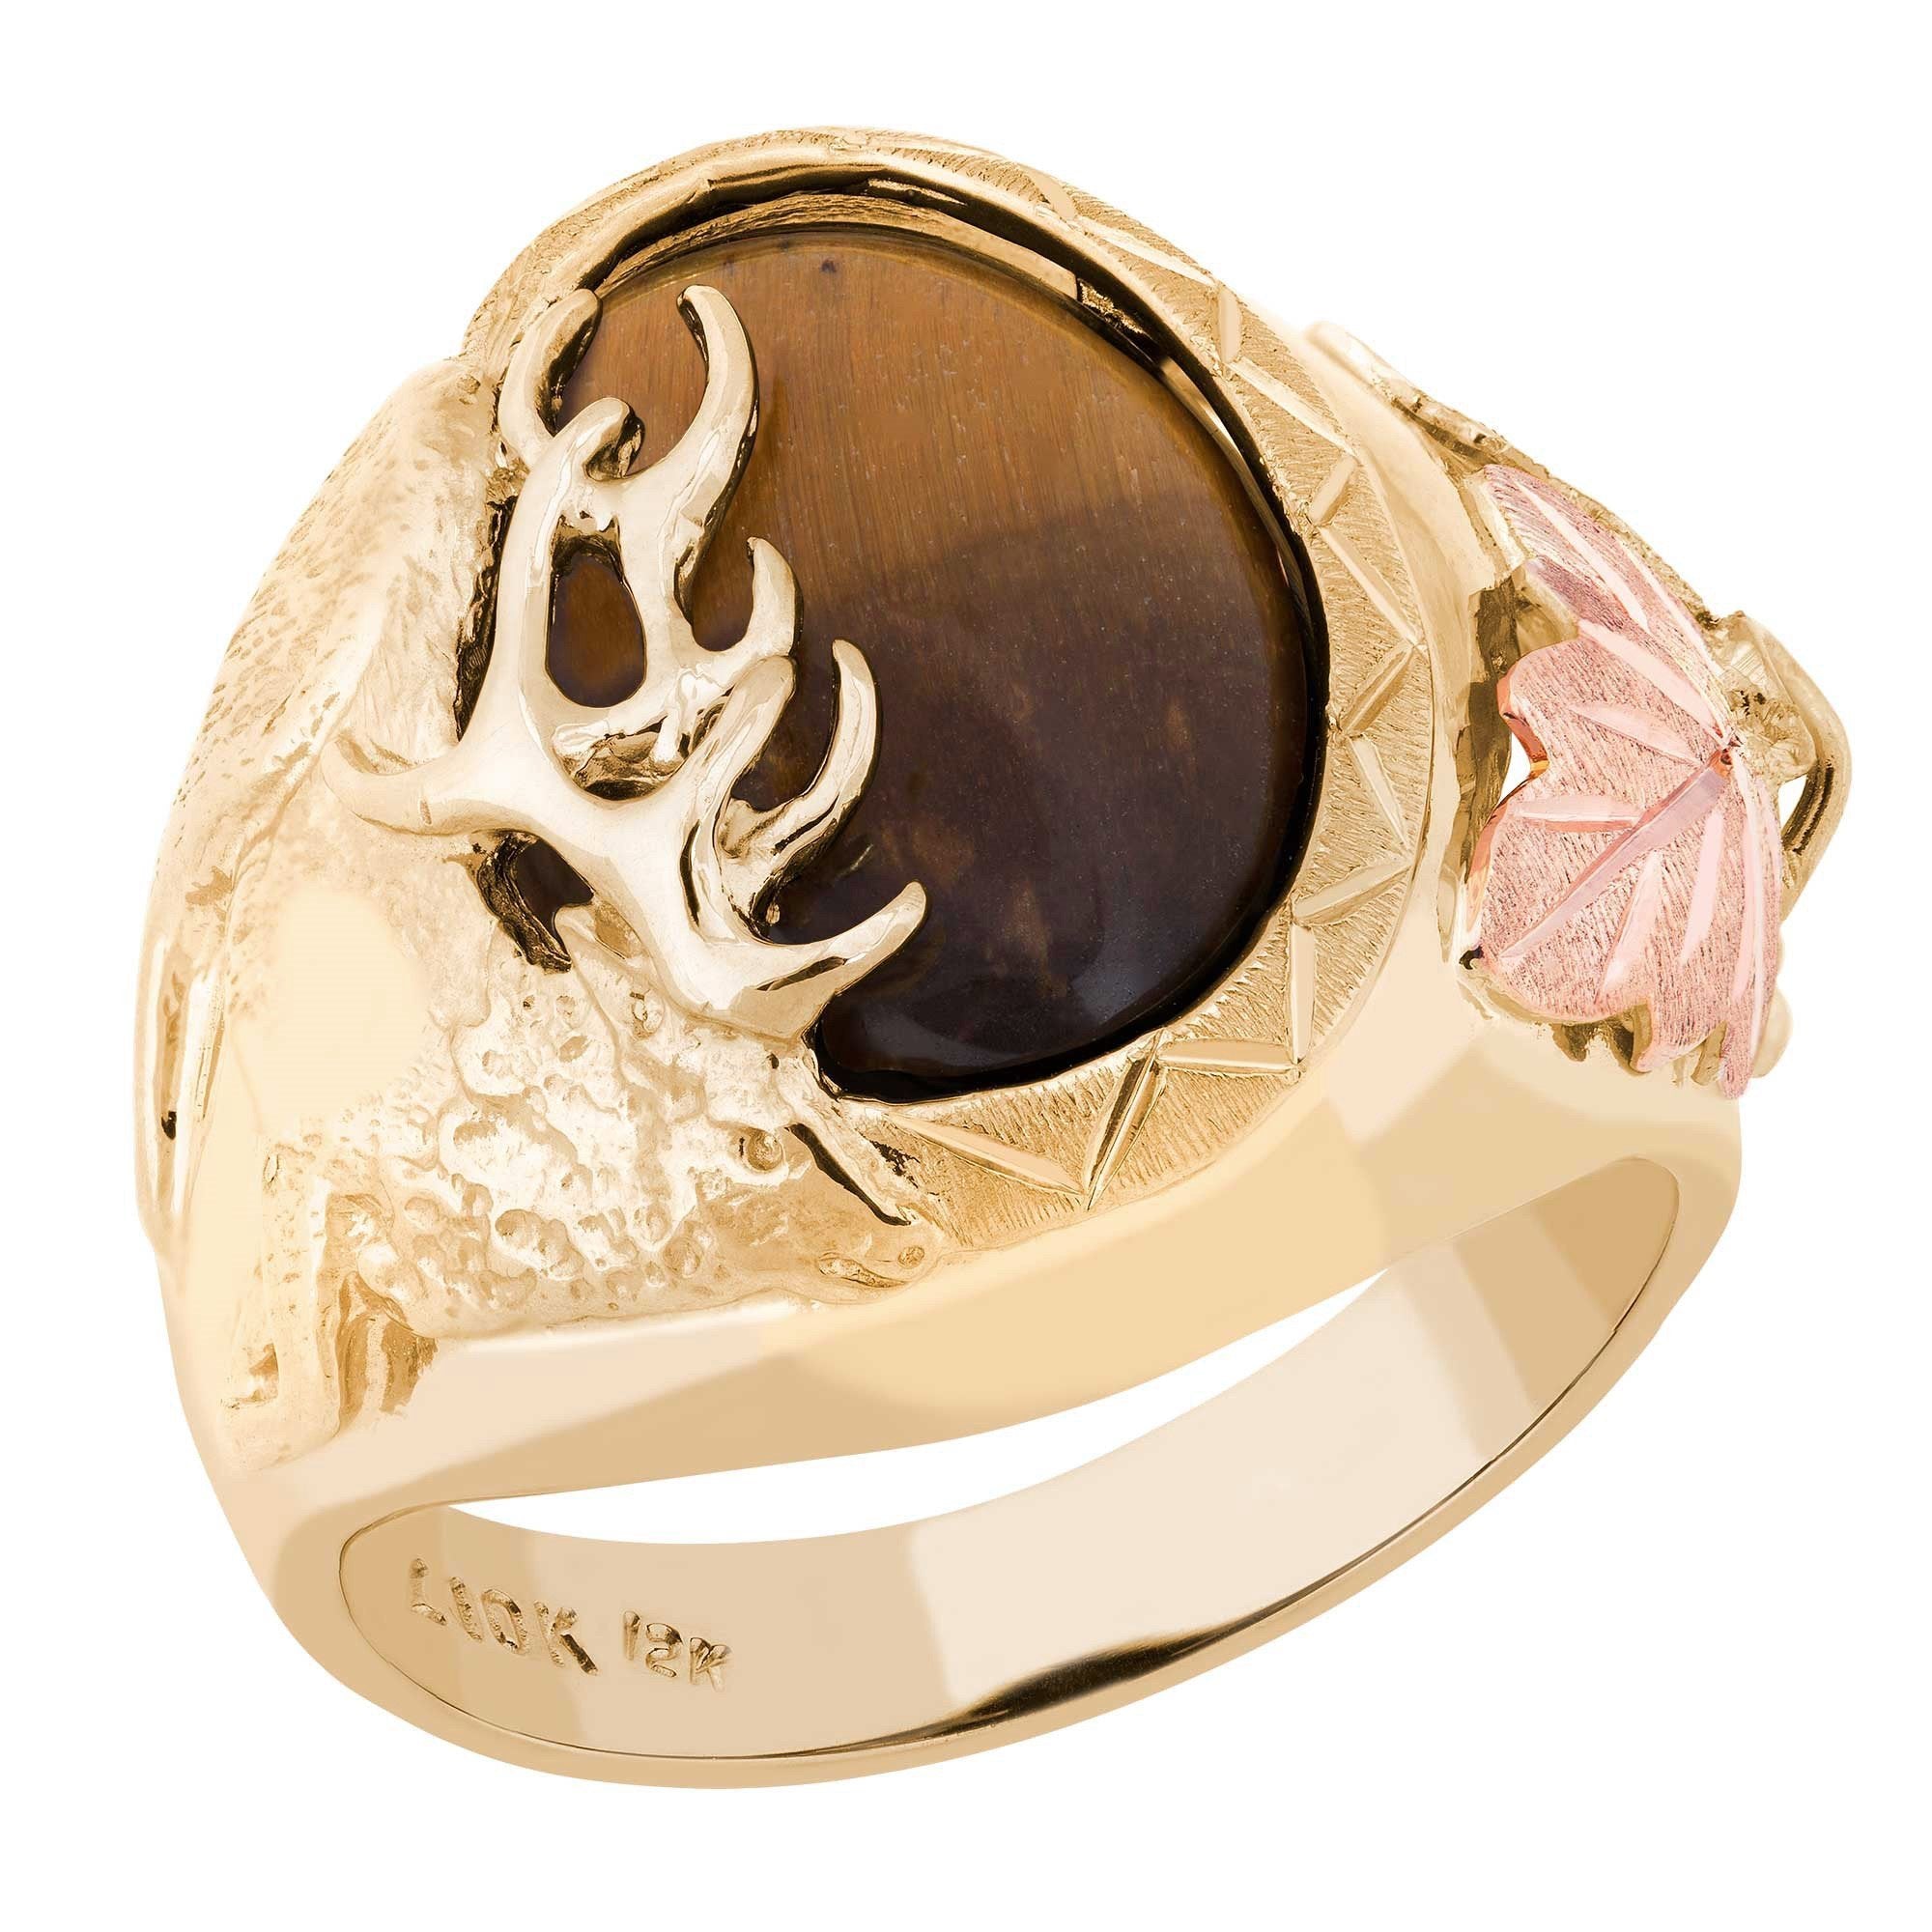 Bleu Royale Men's Wedding Ring With Black Carbon Accent